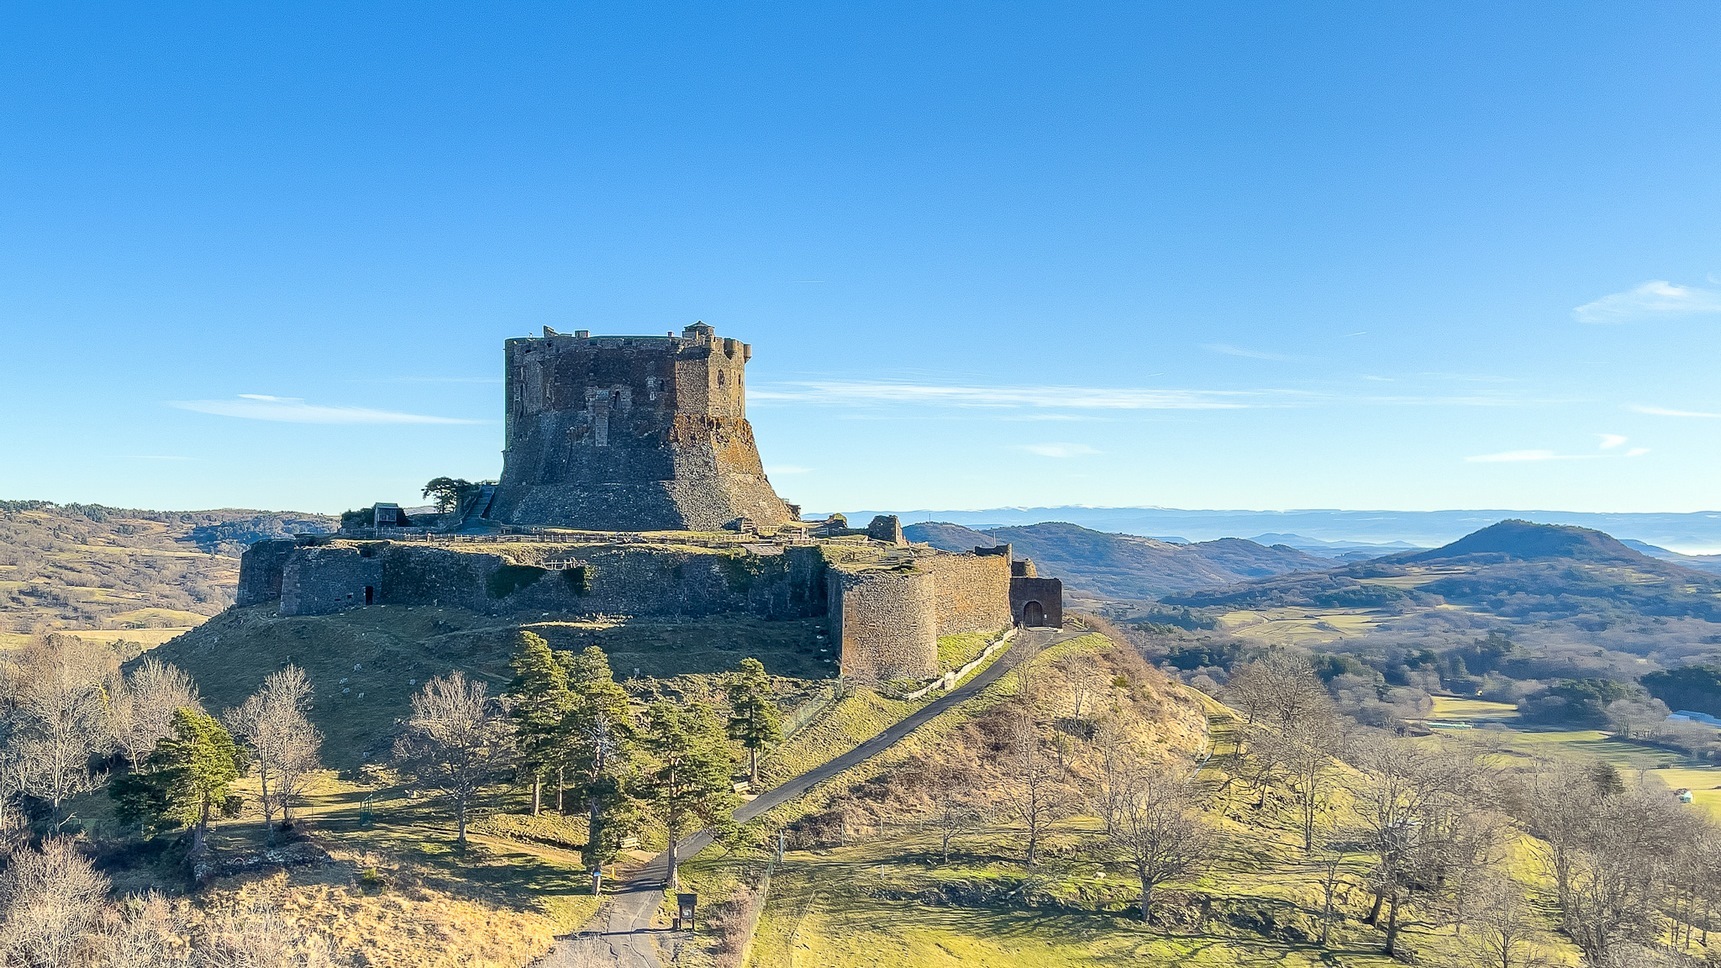 Massif du Sancy, the medieval castle of Murol, gateway to Sancy